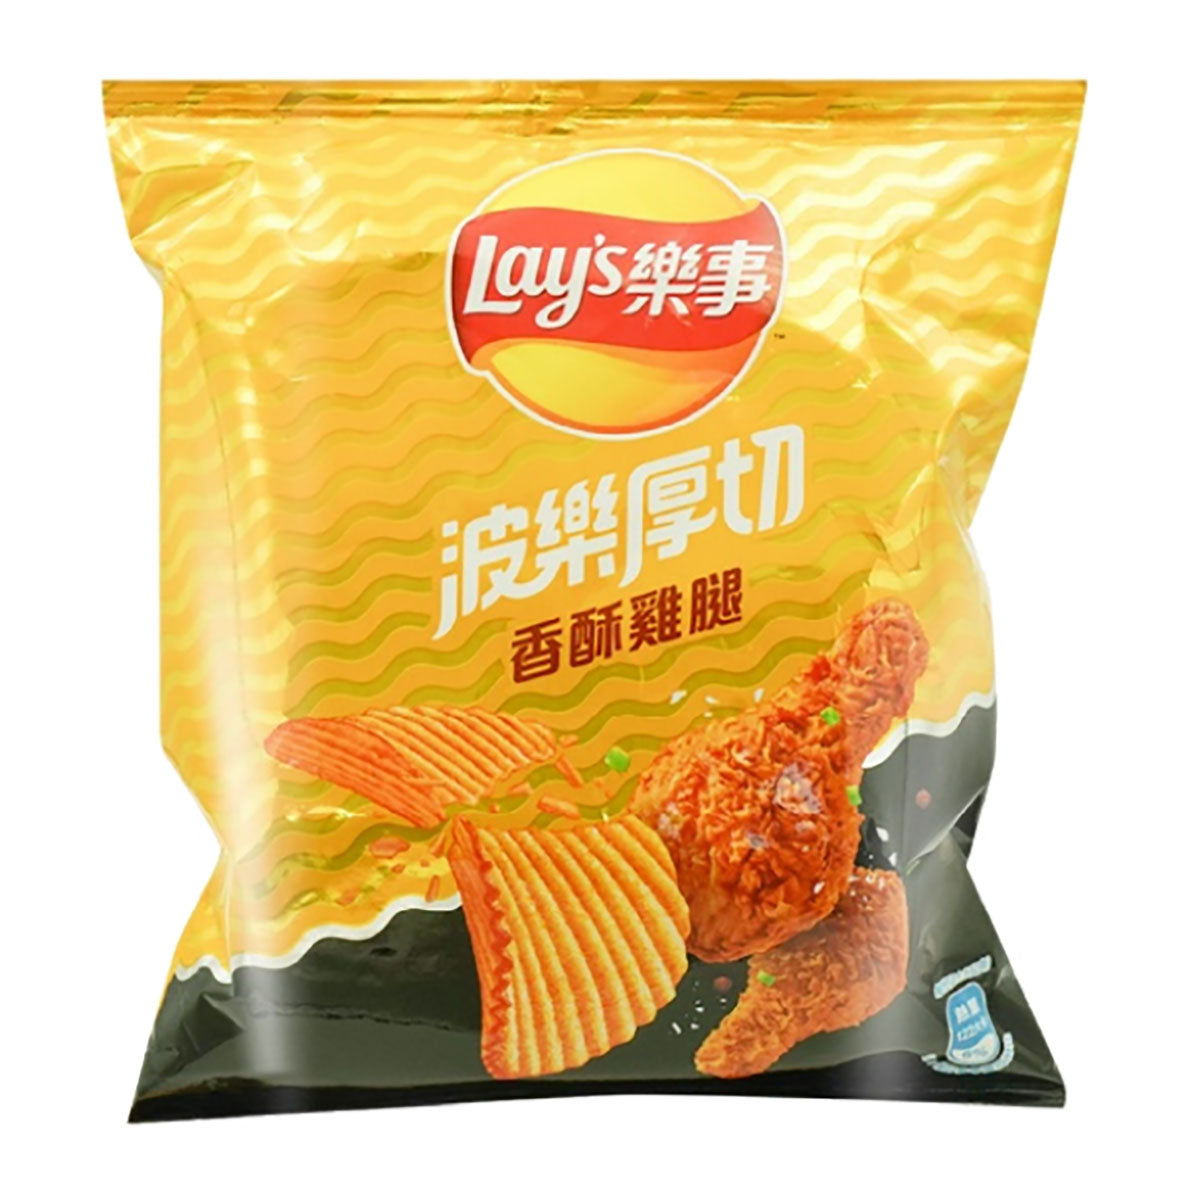 lay's potato chips crispy fried chicken flavor - 34g